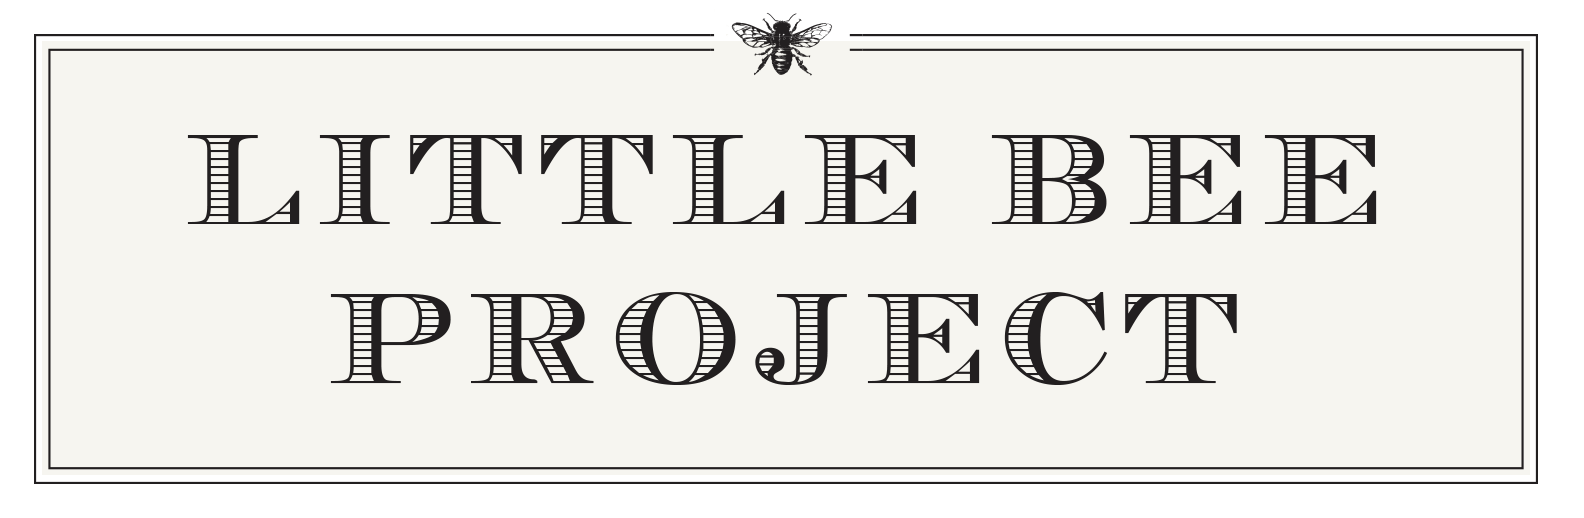 Little Bee Project